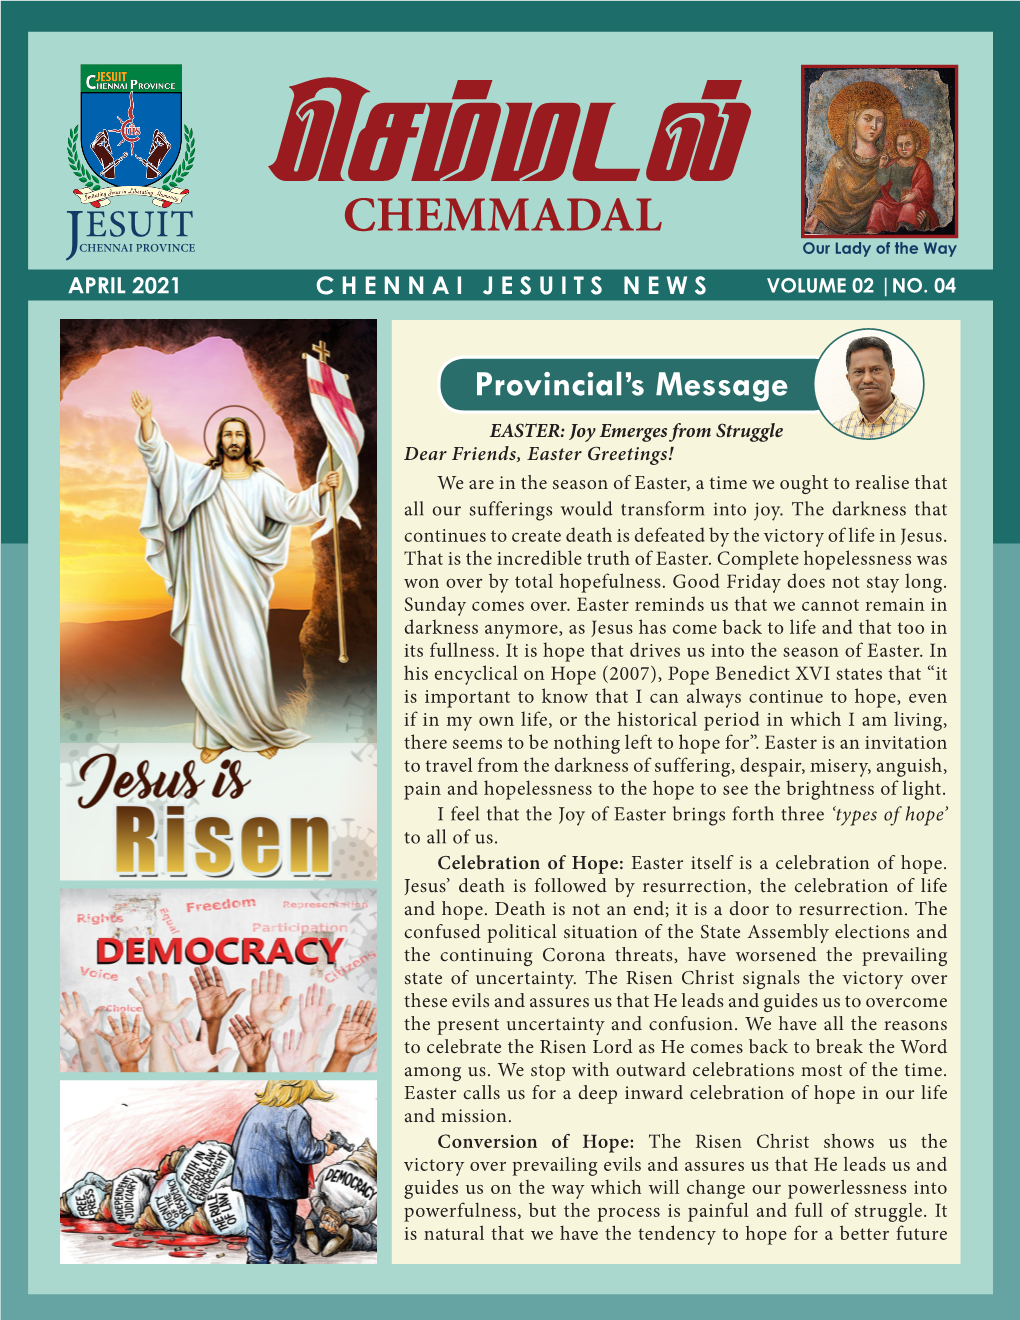 CHEMMADAL JCHENNAI PROVINCE Our Lady of the Way APRIL 2021 CHENNAI JESUITS NEWS VOLUME 02 |NO